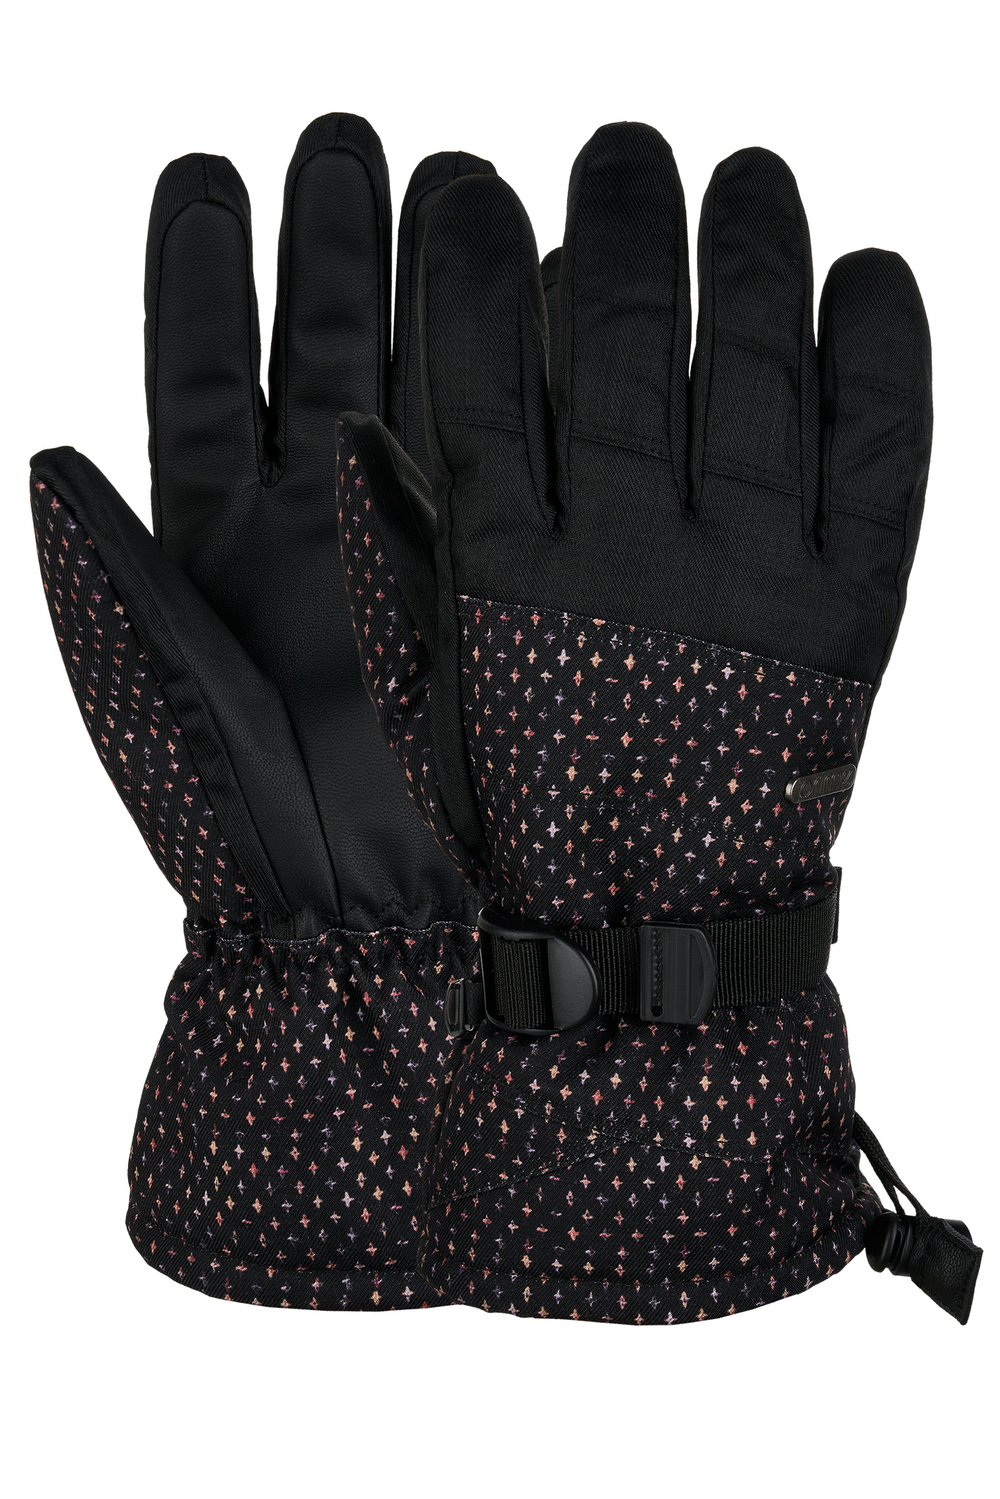 Перчатки PRIME  FUN-F2 Gloves (Space)